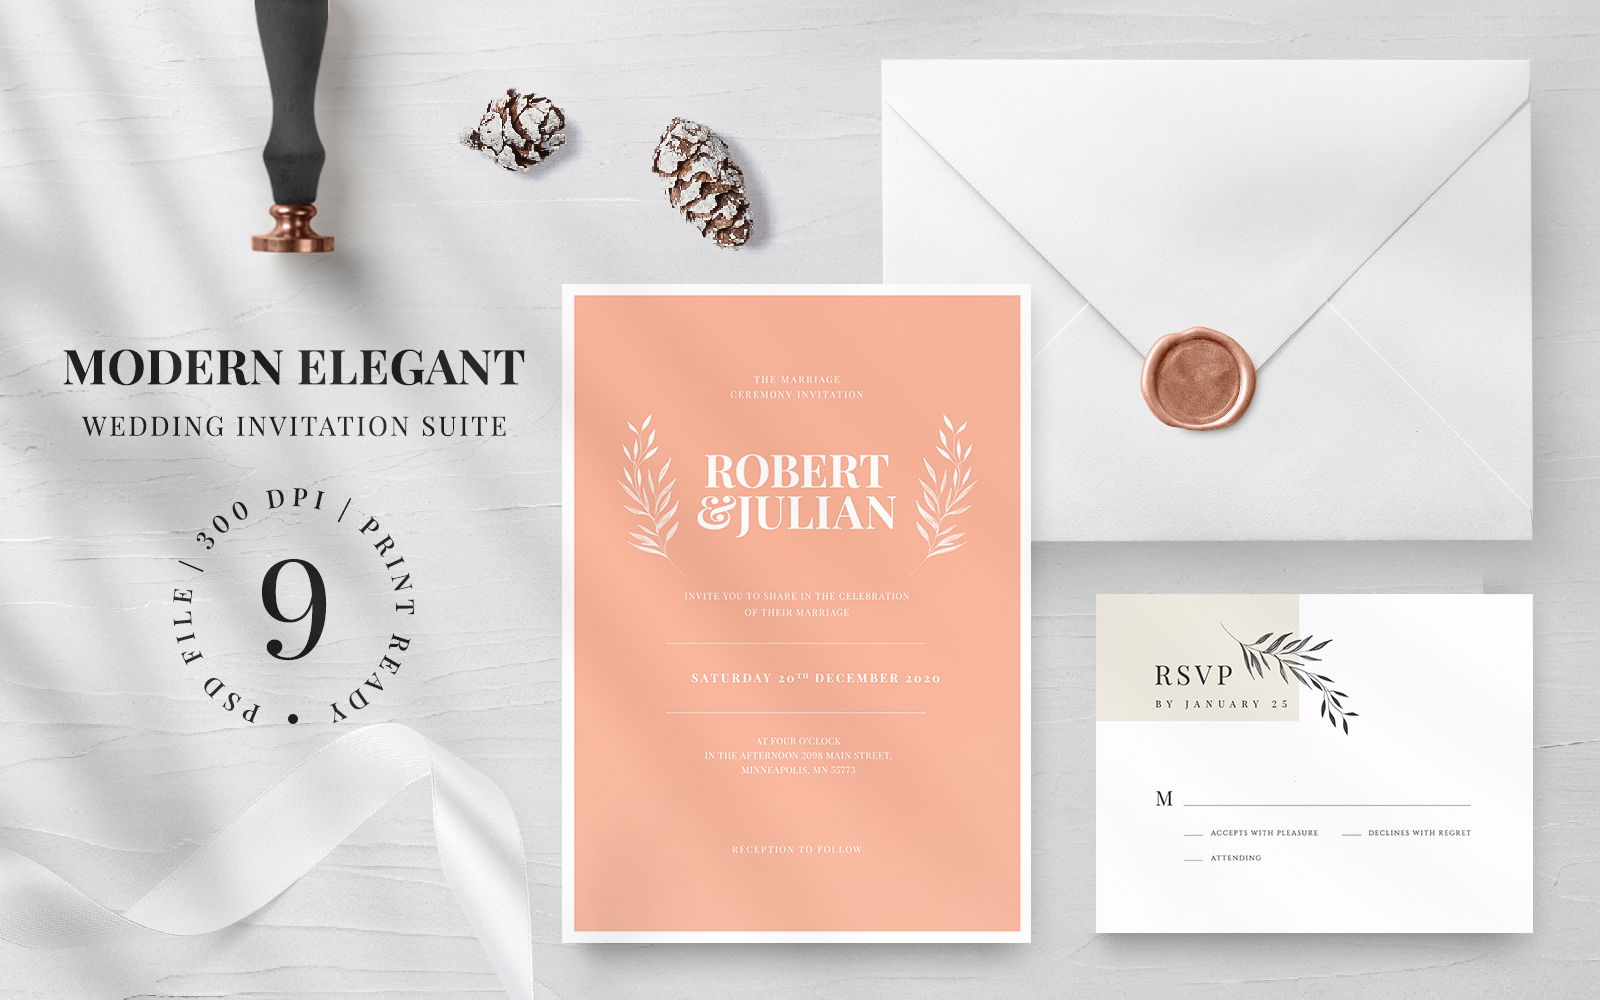 Modern Elegant Wedding Invitation Suite - Corporate Identity Template